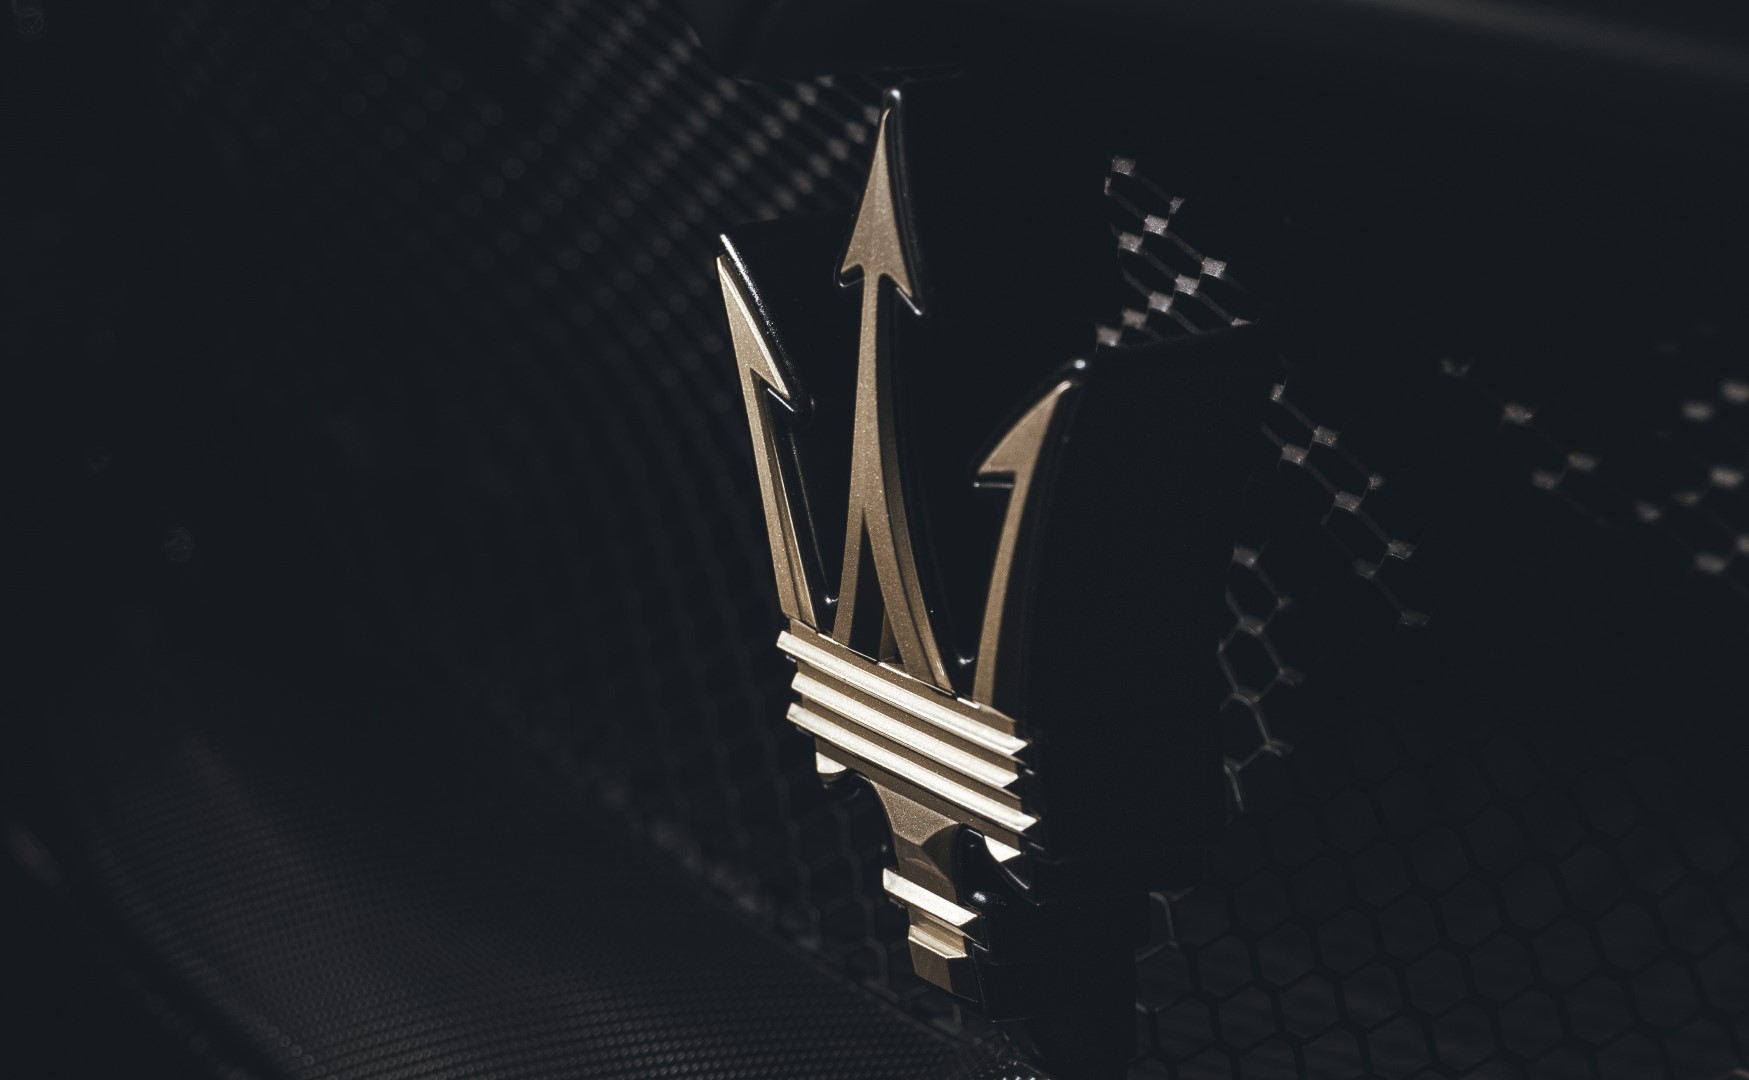 Maserati MC20 Notte will be limited to just 50 units